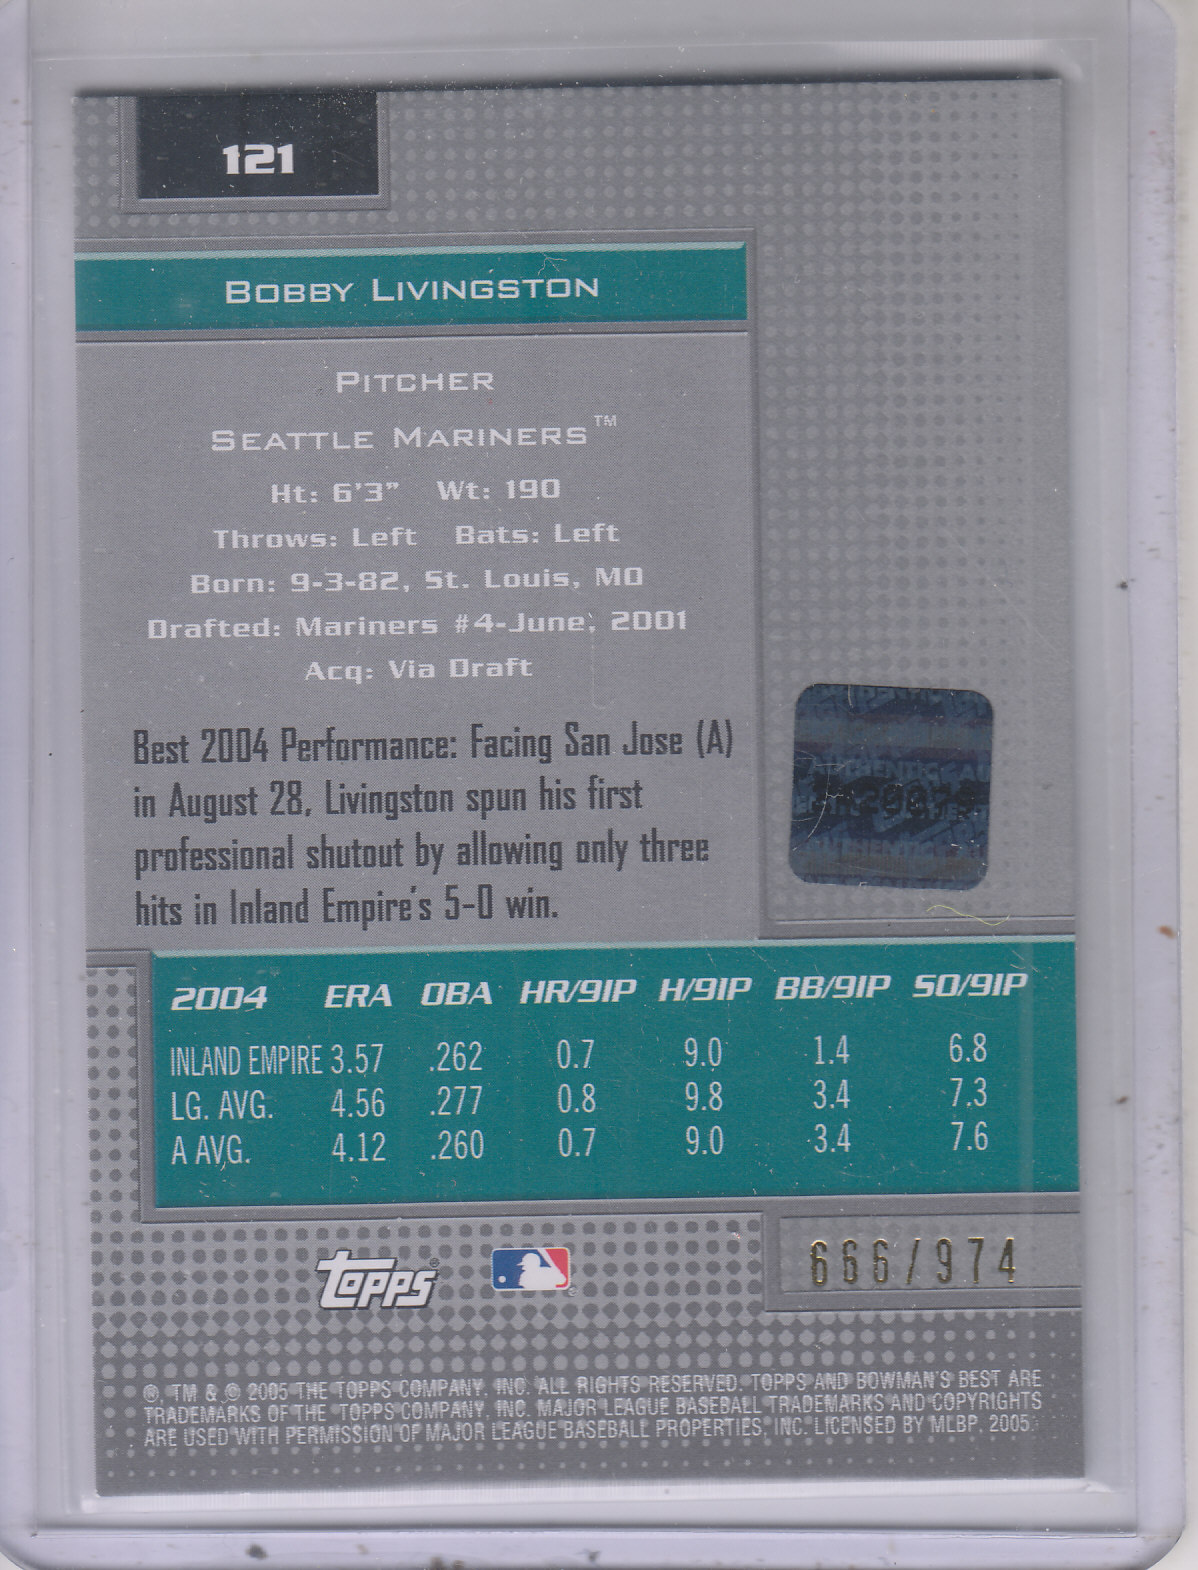 2005 Bowman's Best #121 Bobby Livingston FY AU RC back image